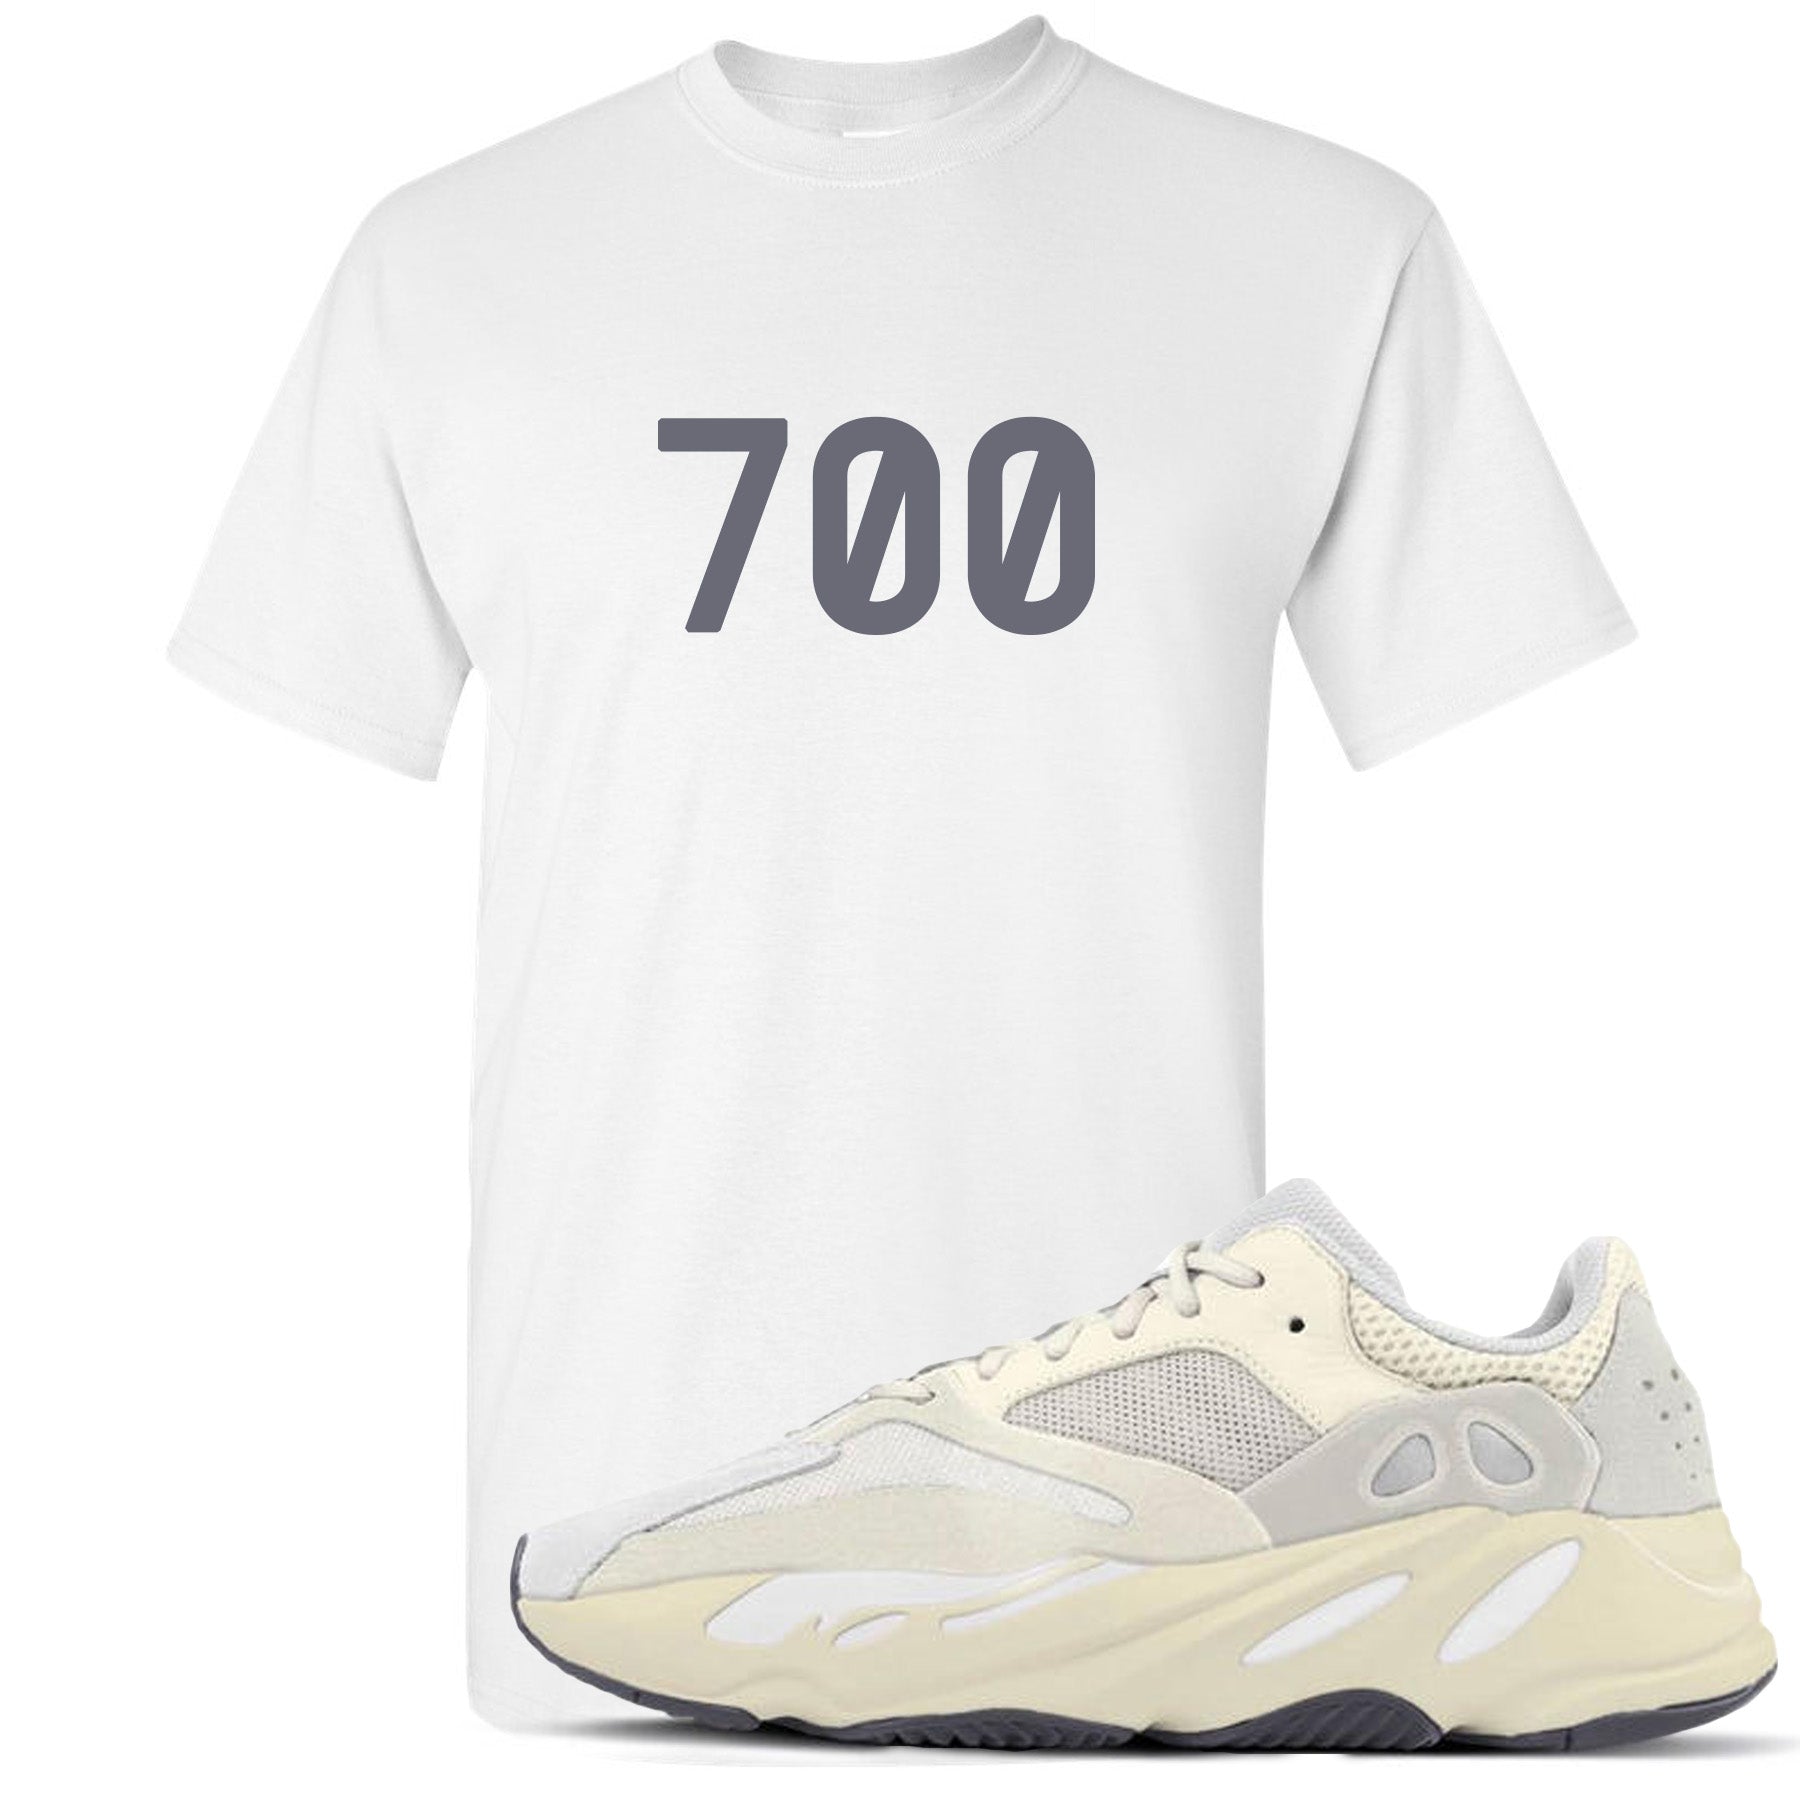 yeezy 700 t shirt